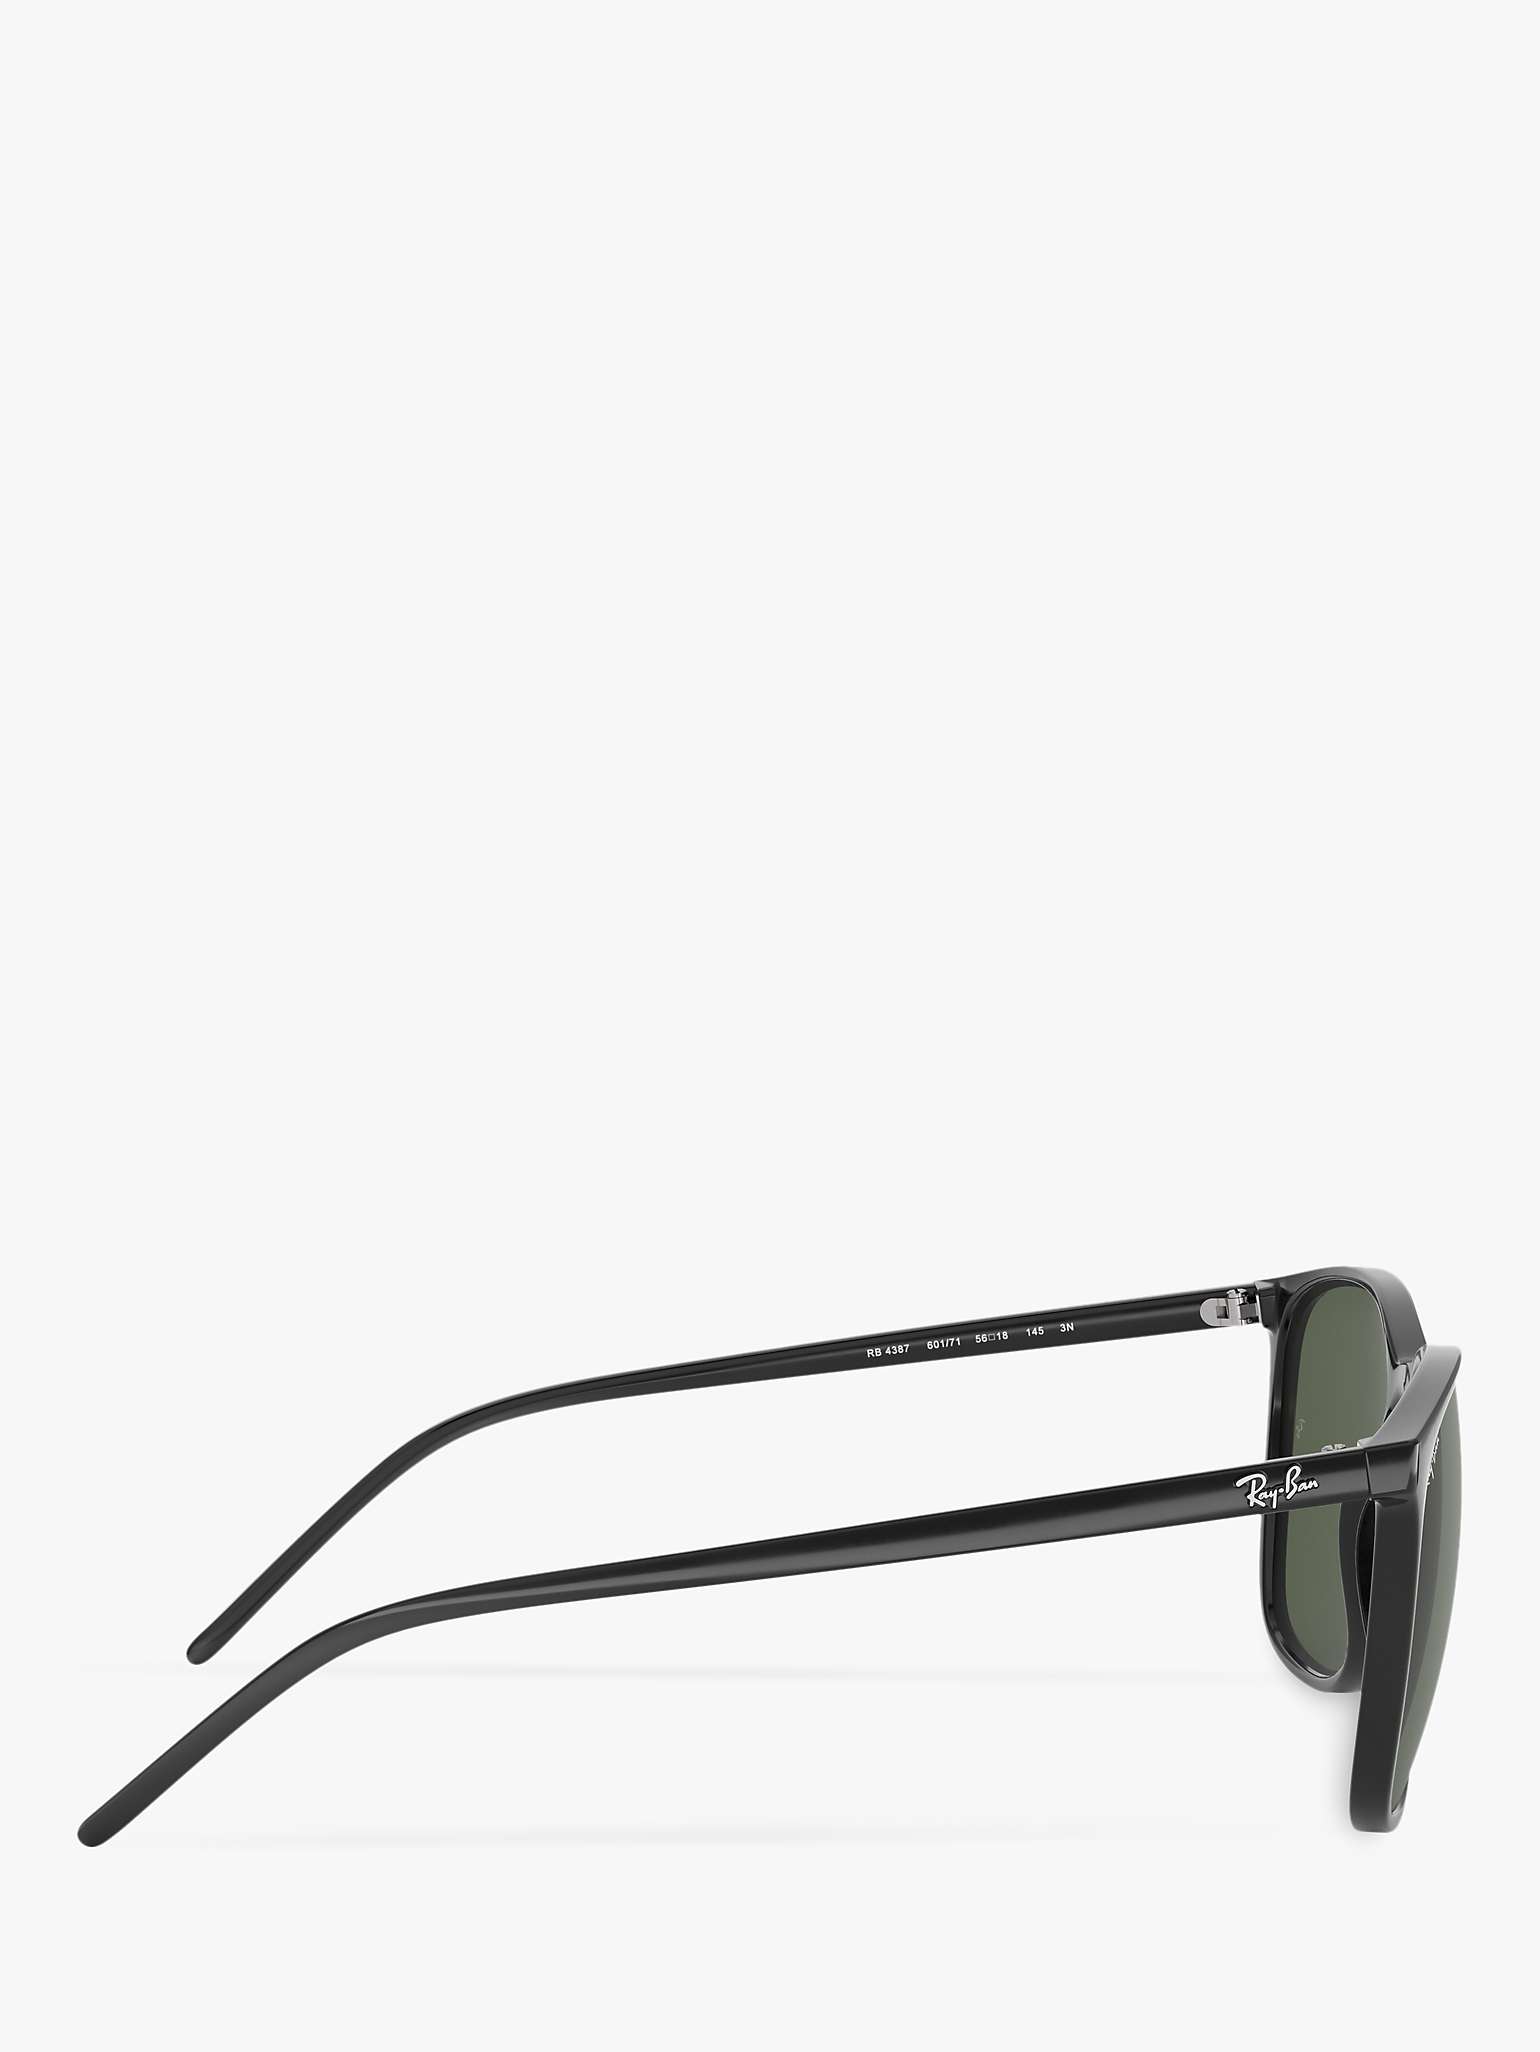 Buy Ray-Ban RB4387 Men's Wayfarer Sunglasses Online at johnlewis.com